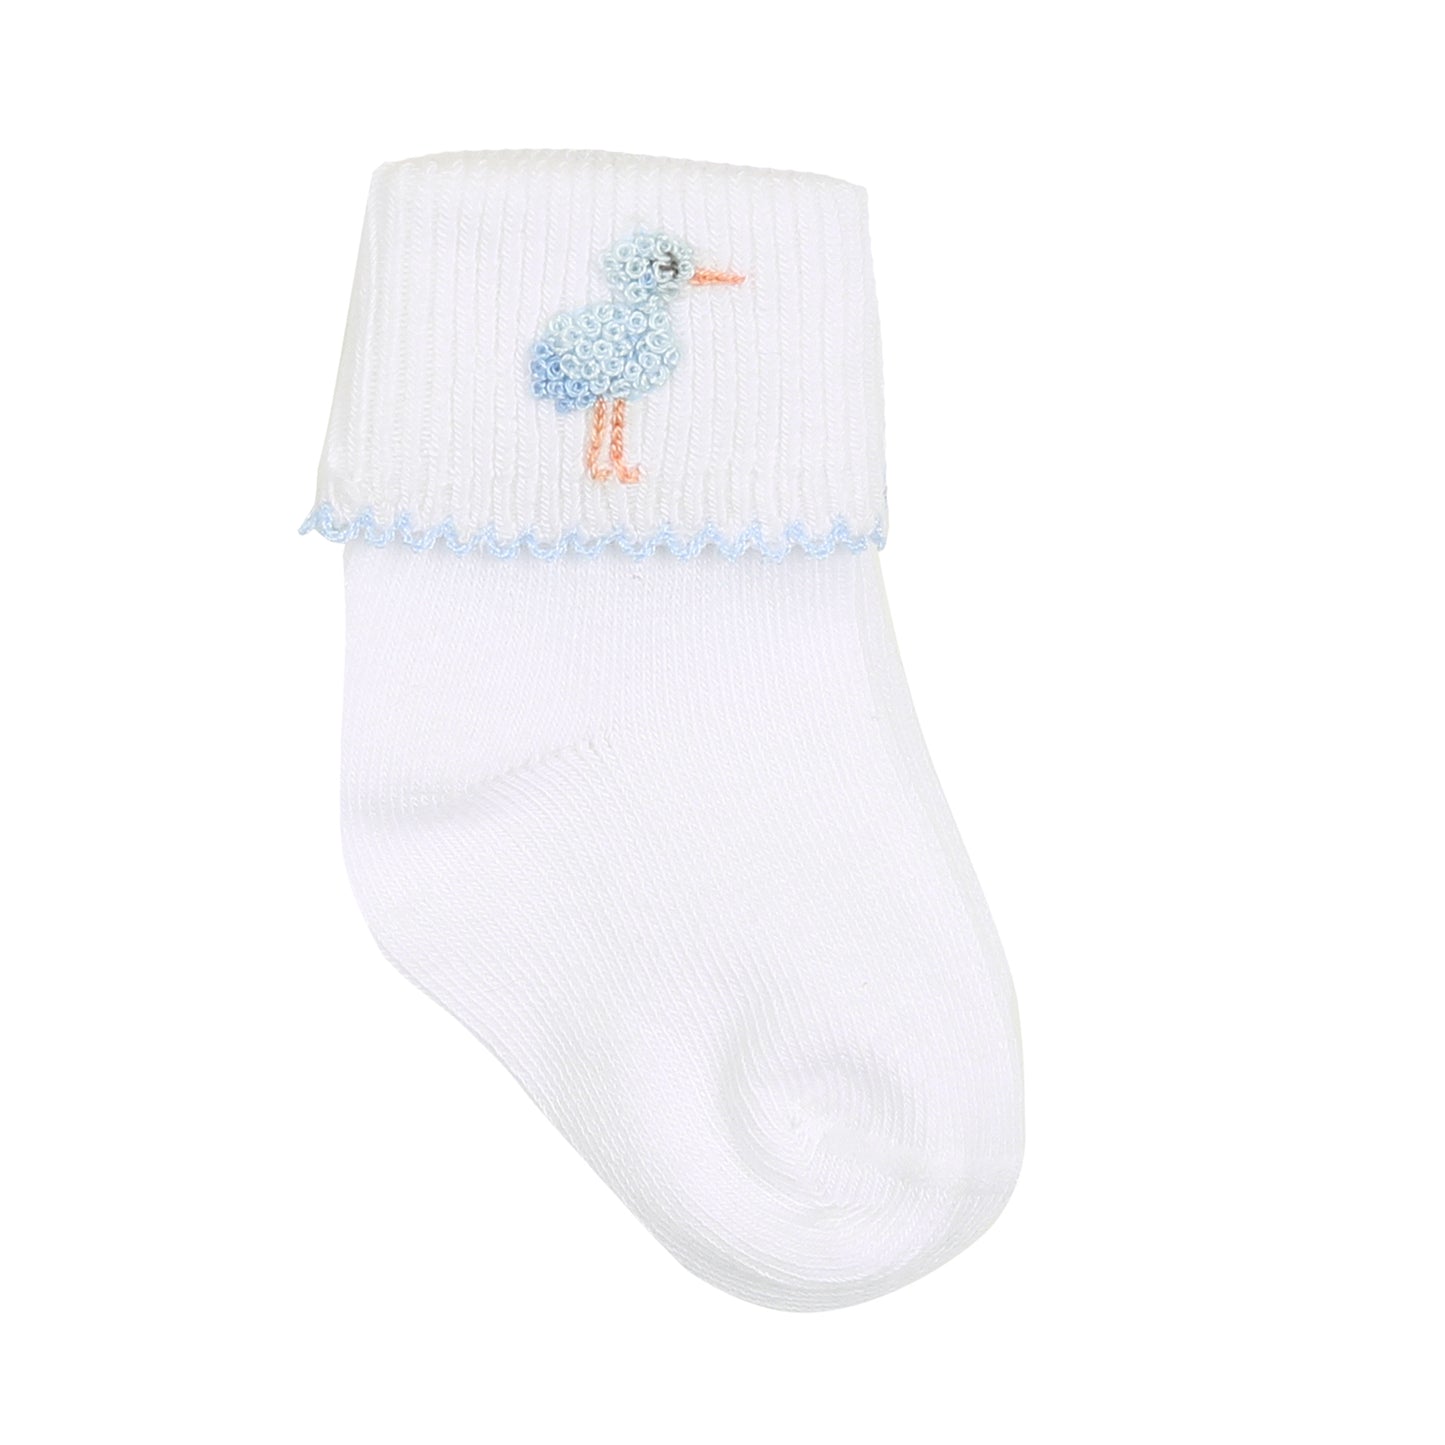 Tiny Stork Embroidered Socks